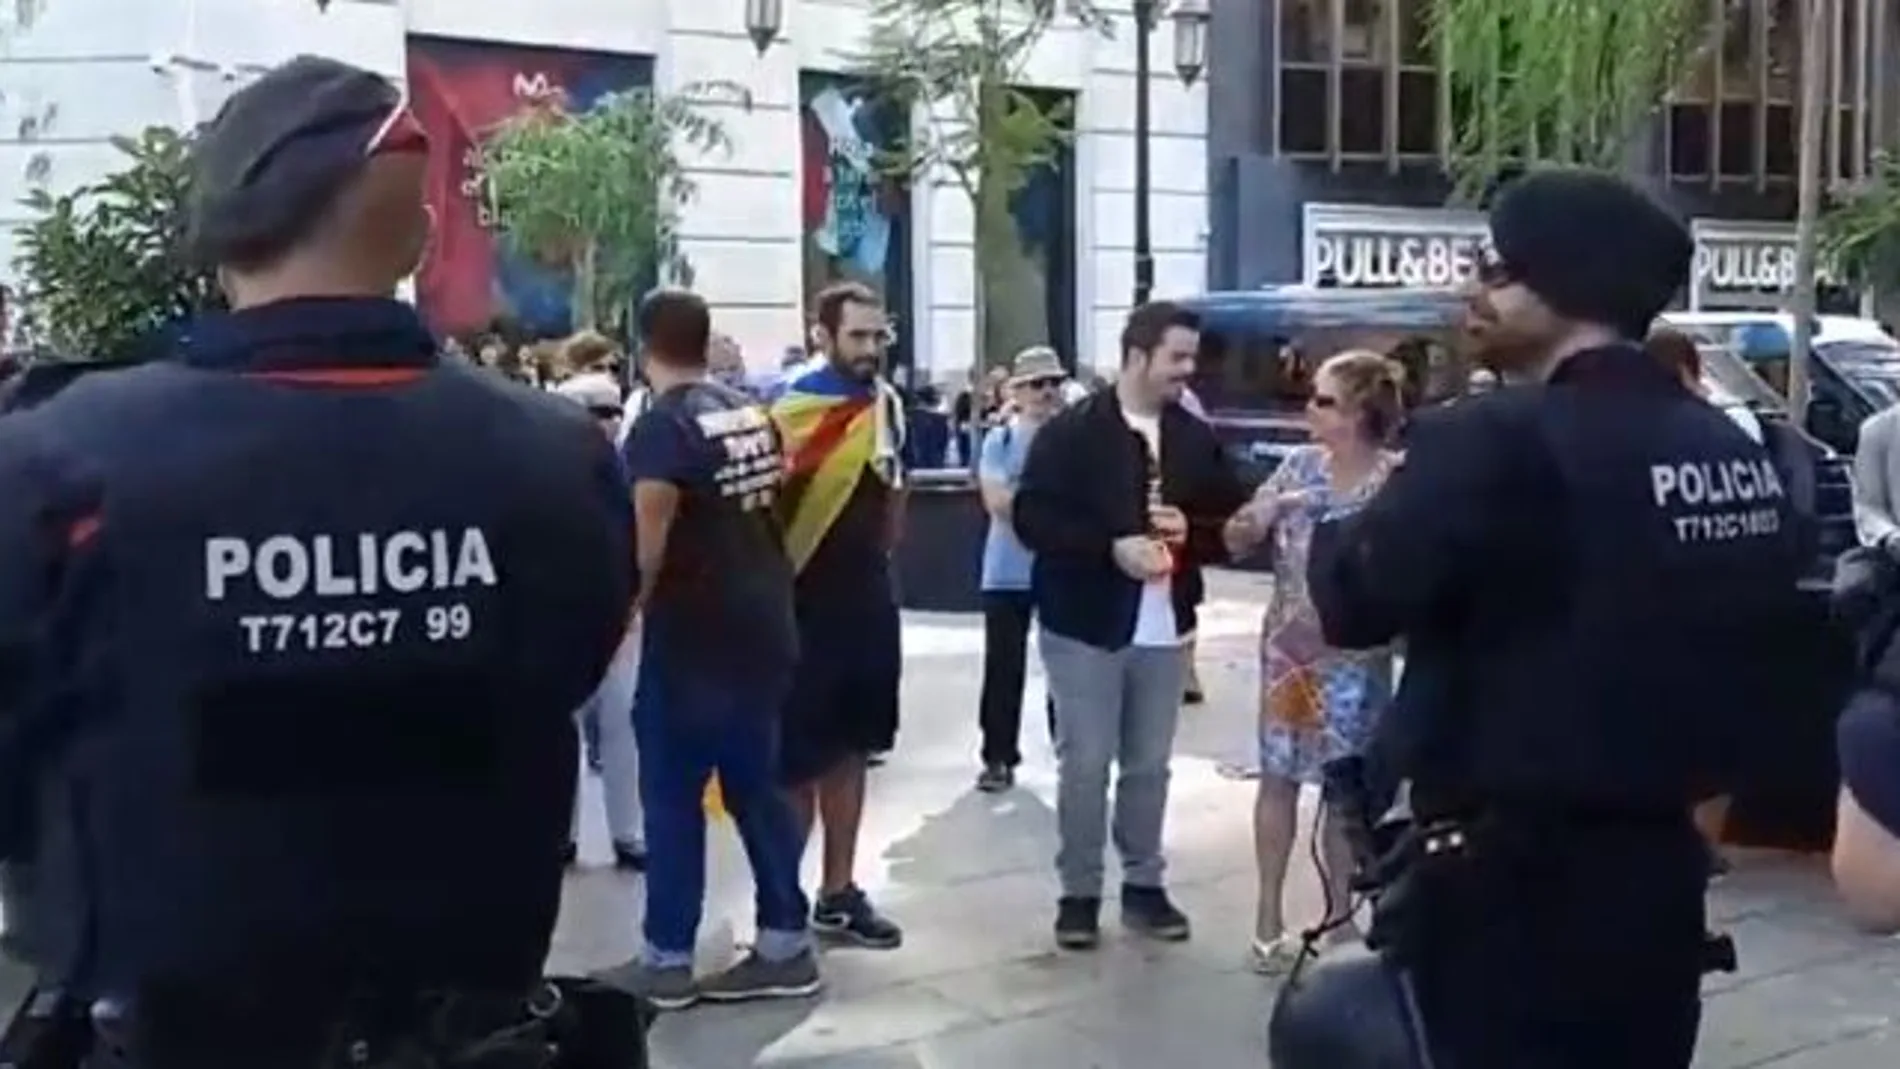 Los mossos protegen el stand